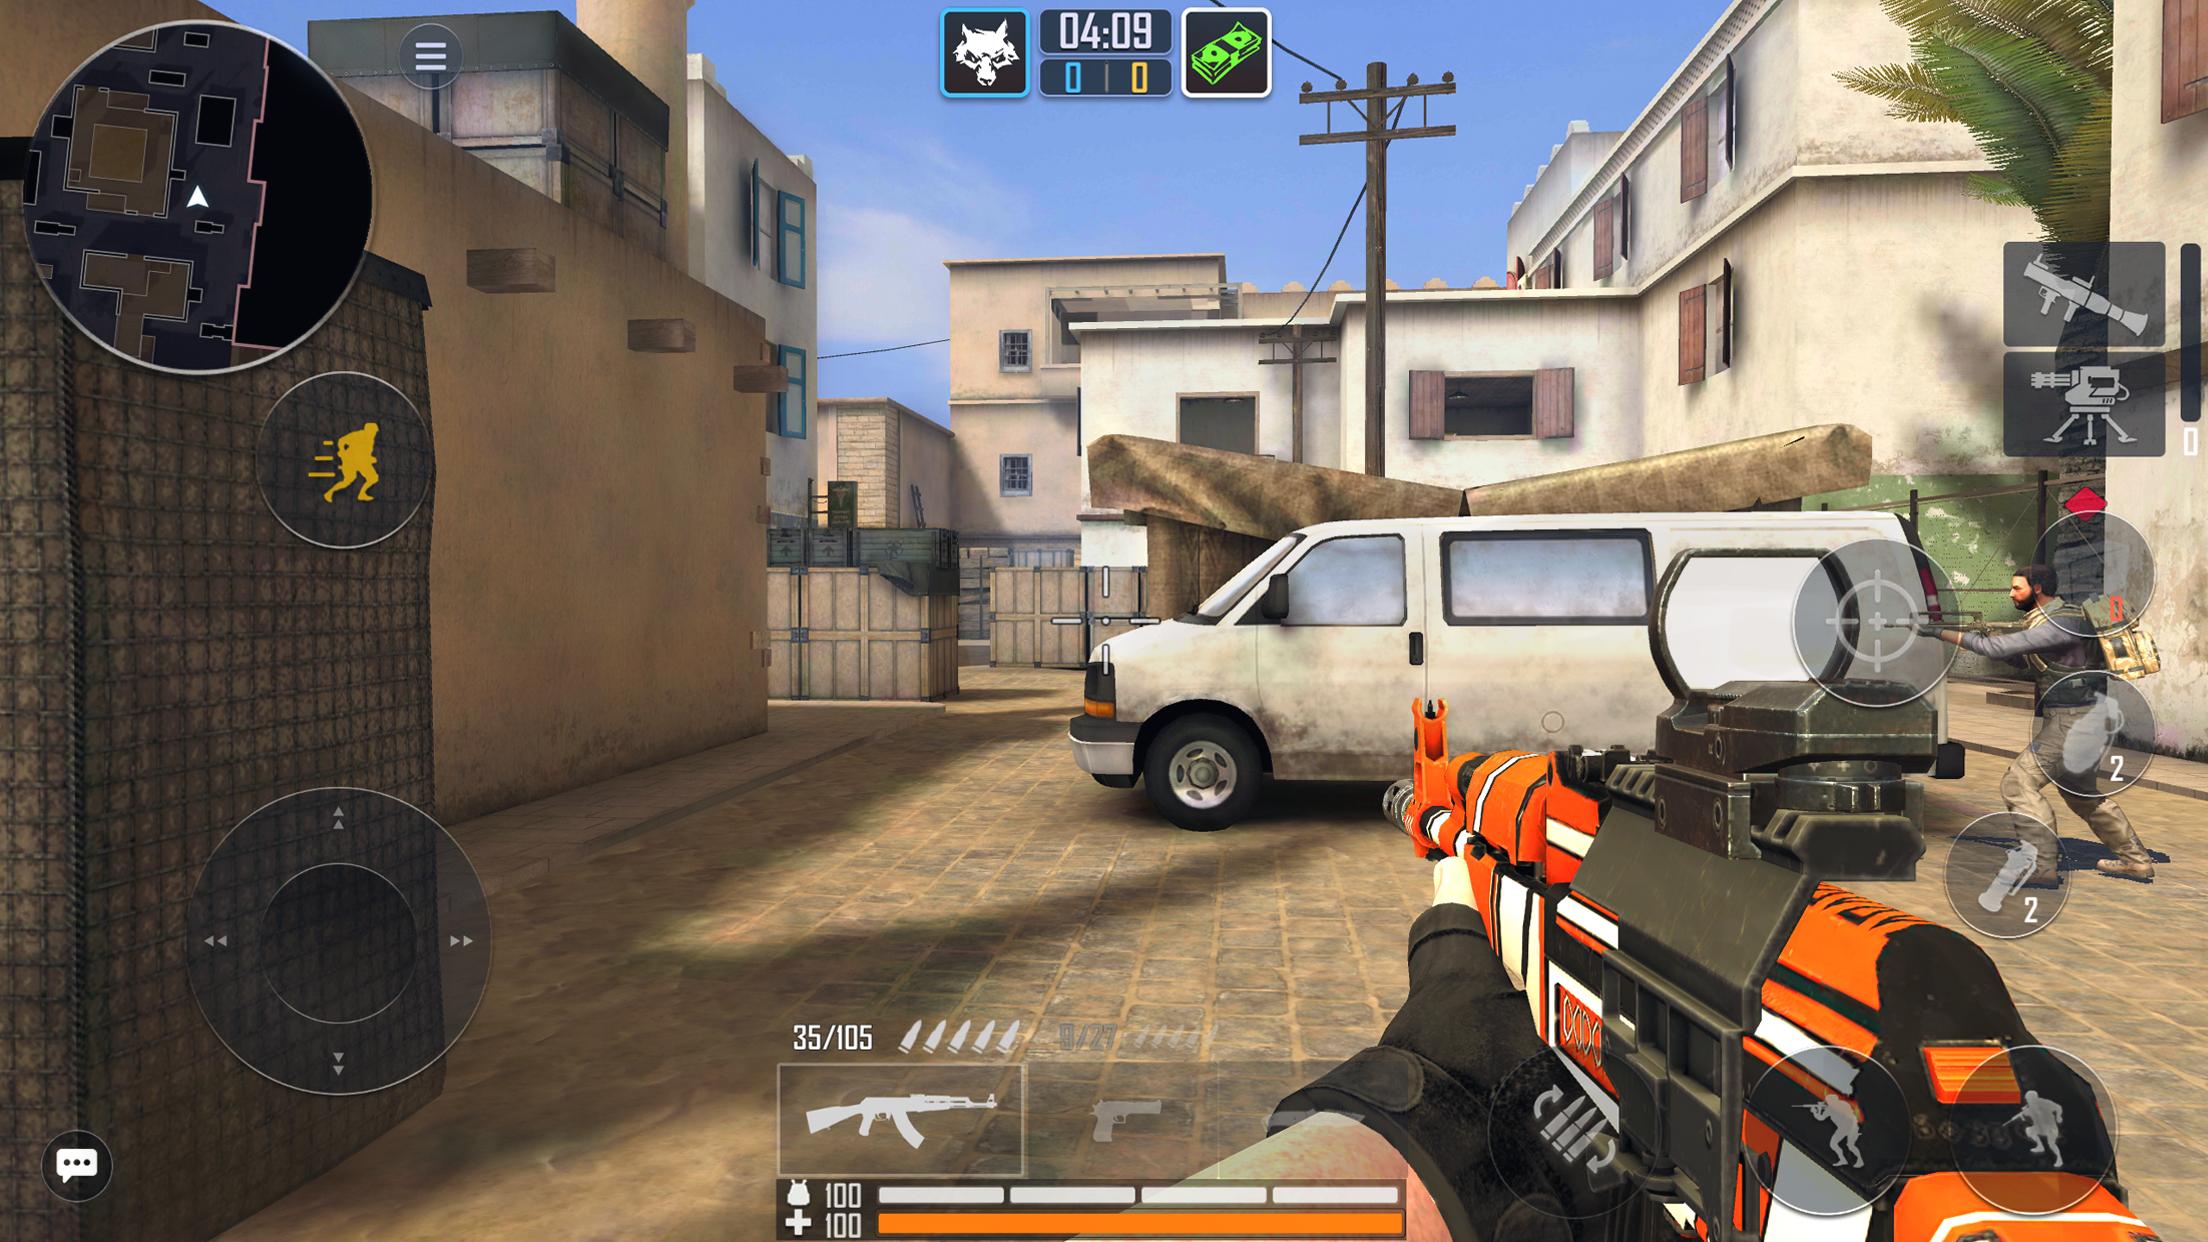 Fire Strike Online - Free Shooter FPS 1.26 Screenshot 6